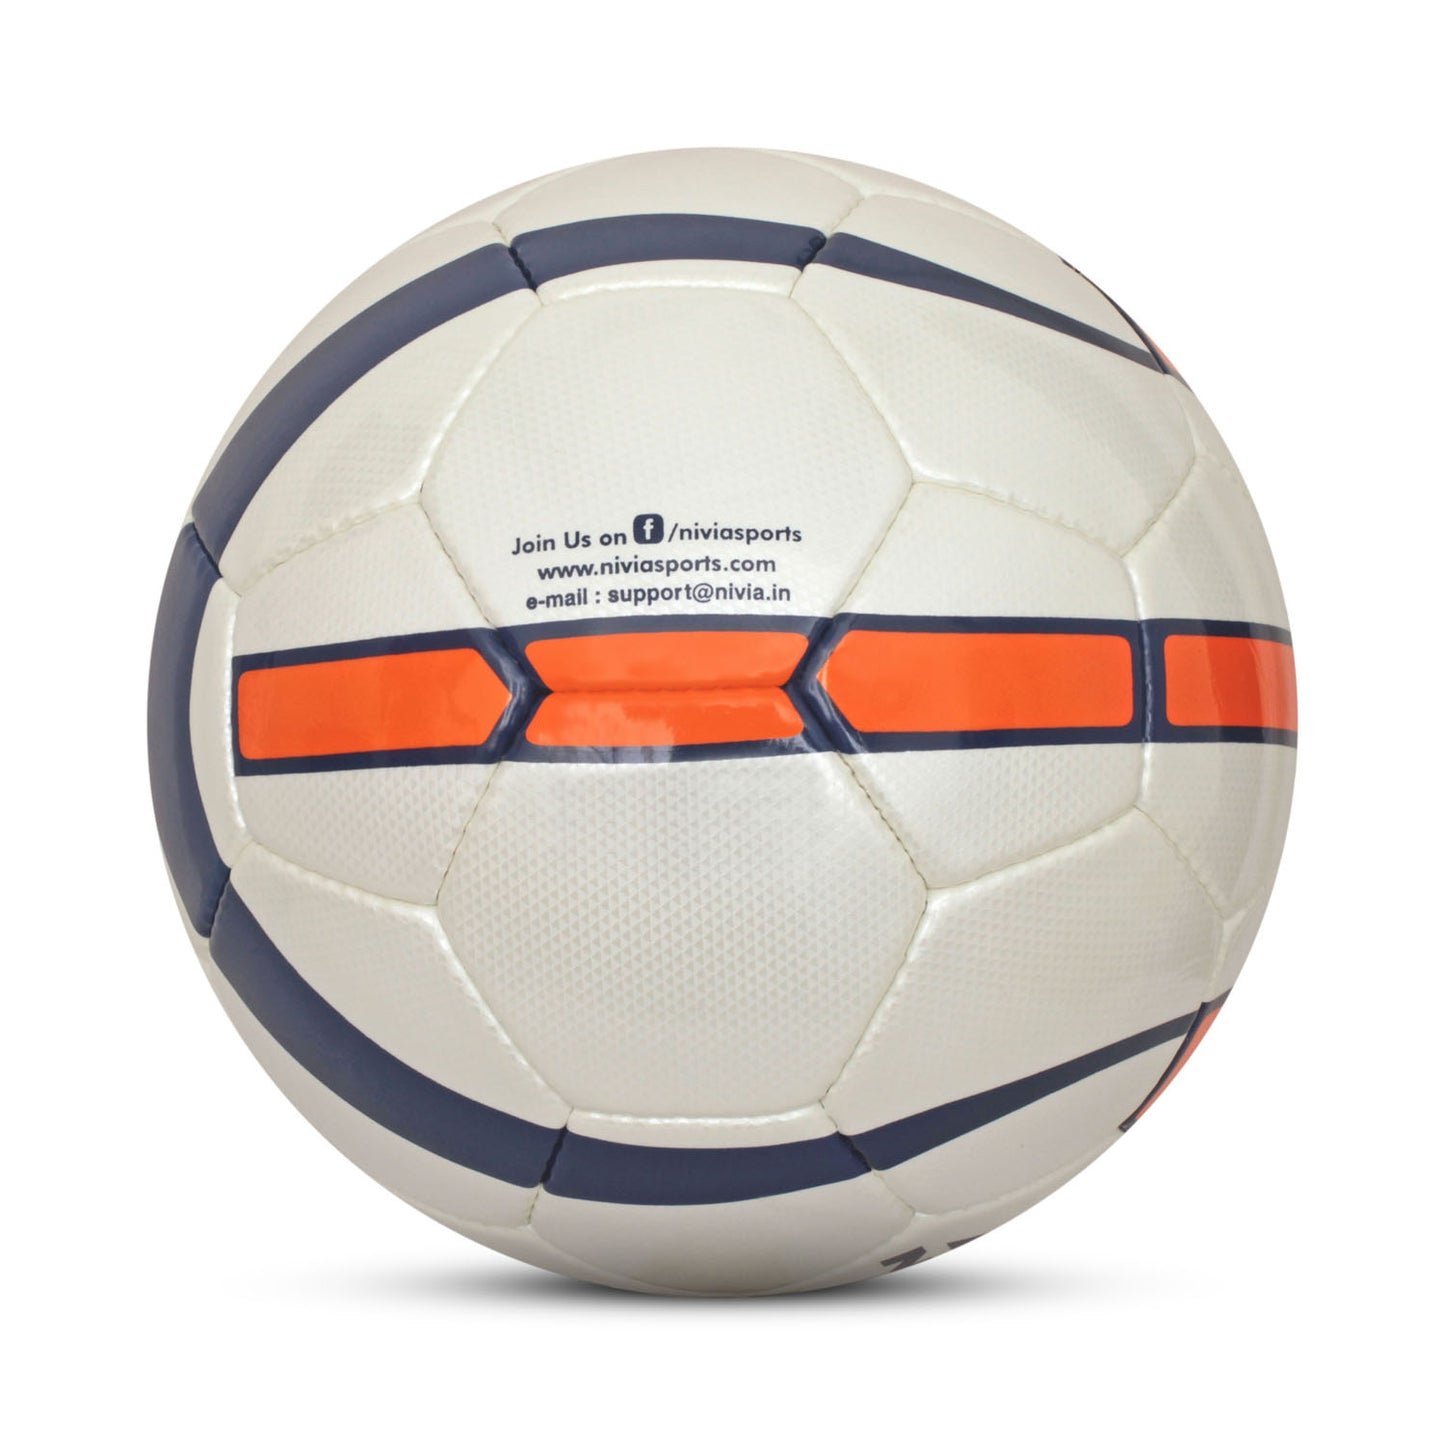 Nivia Simbolo Football, White - Size 5 - Best Price online Prokicksports.com